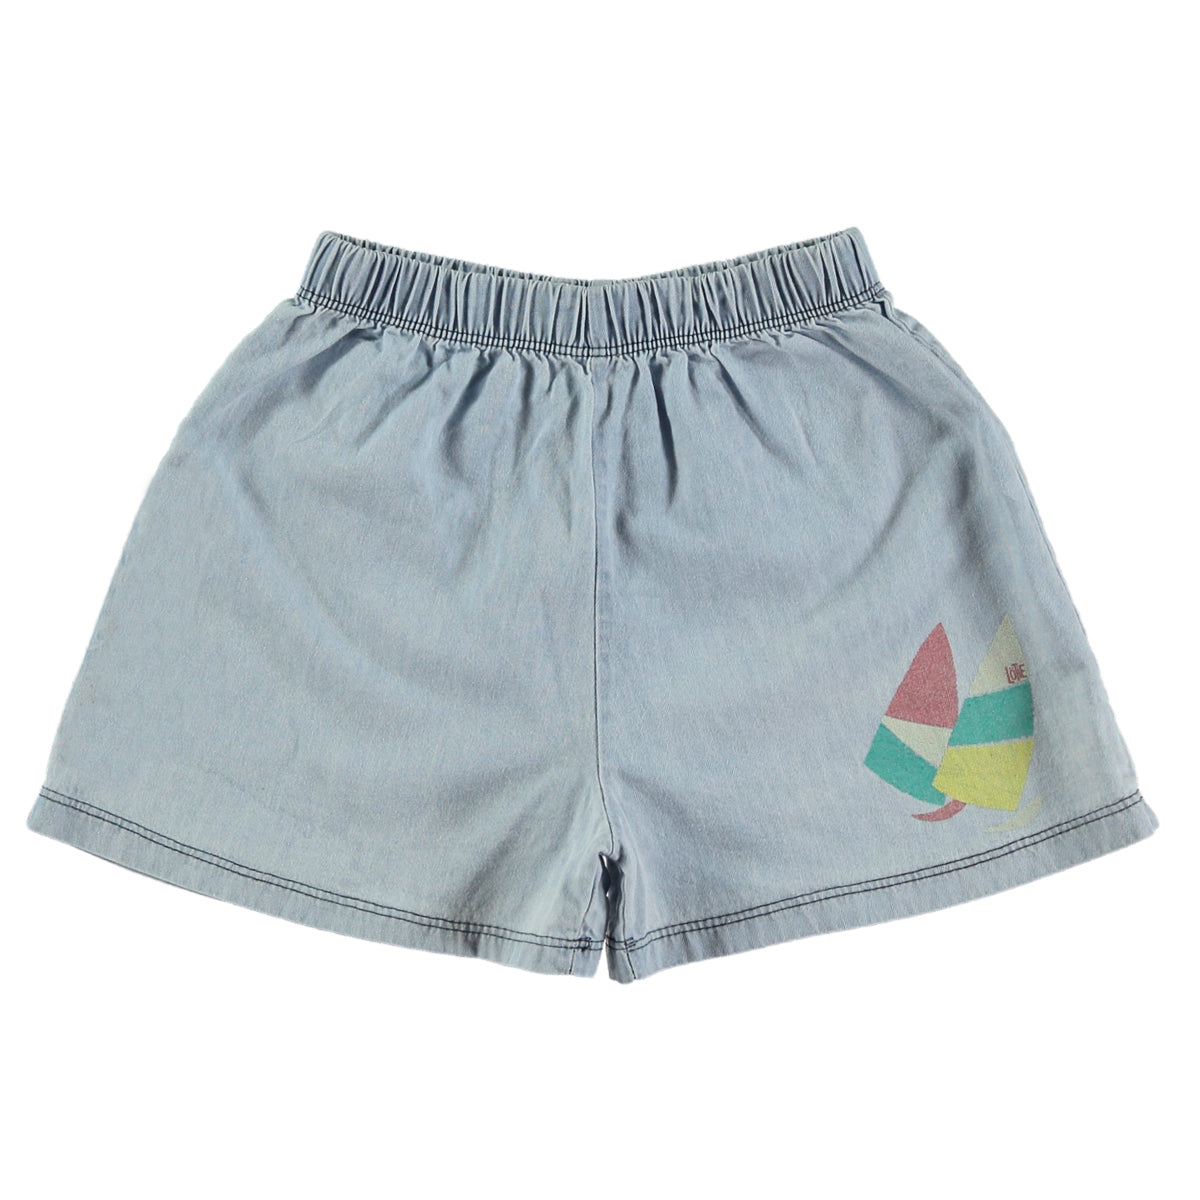 Lotie Kids - denim shorts - windsurf - bleach